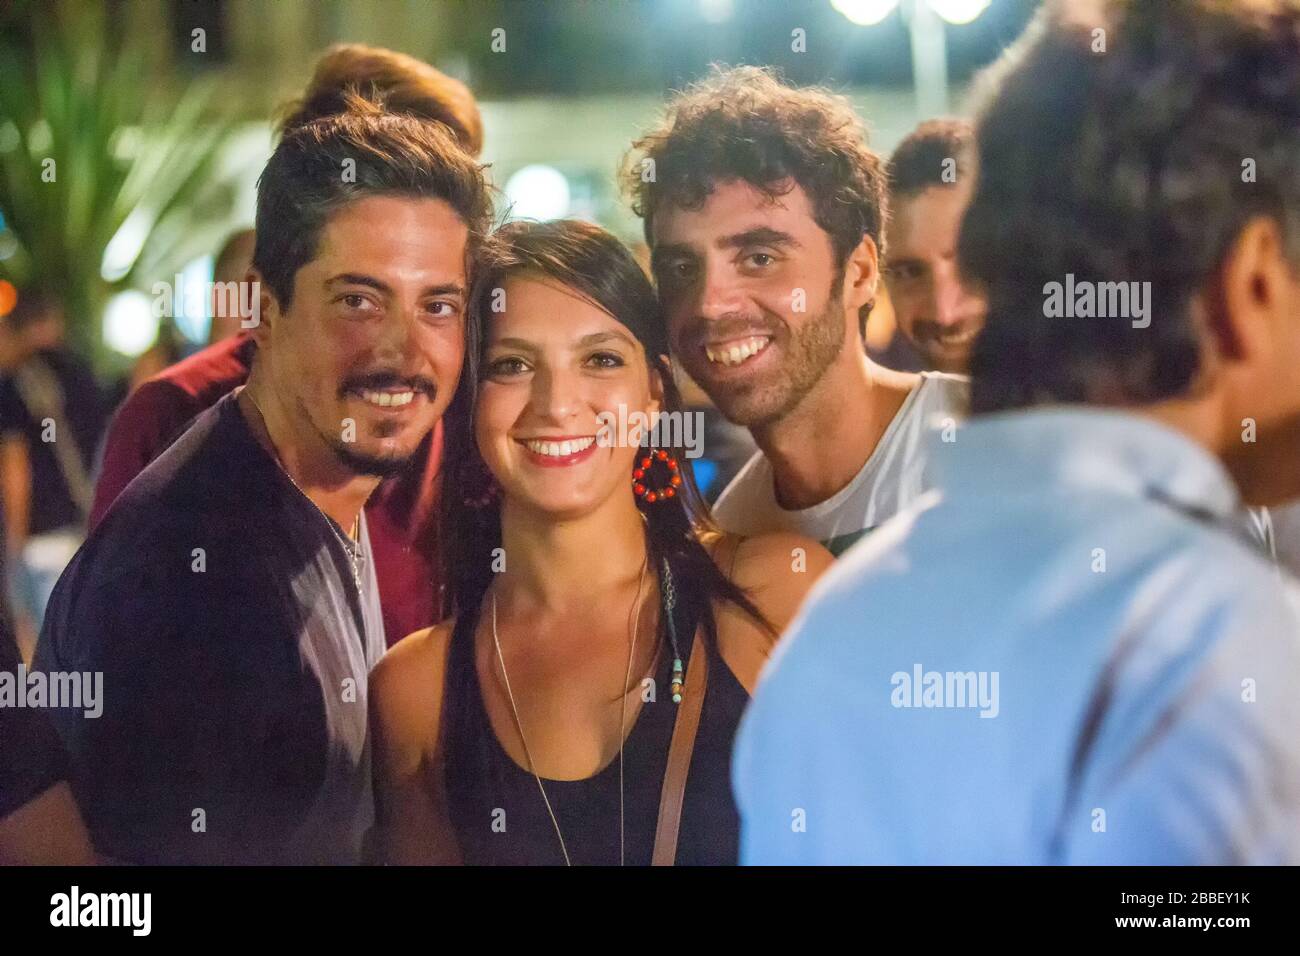 09 15 2015 Catania Italy Cute Smiling Italian People Portrait People In Catania Stock Photo Alamy